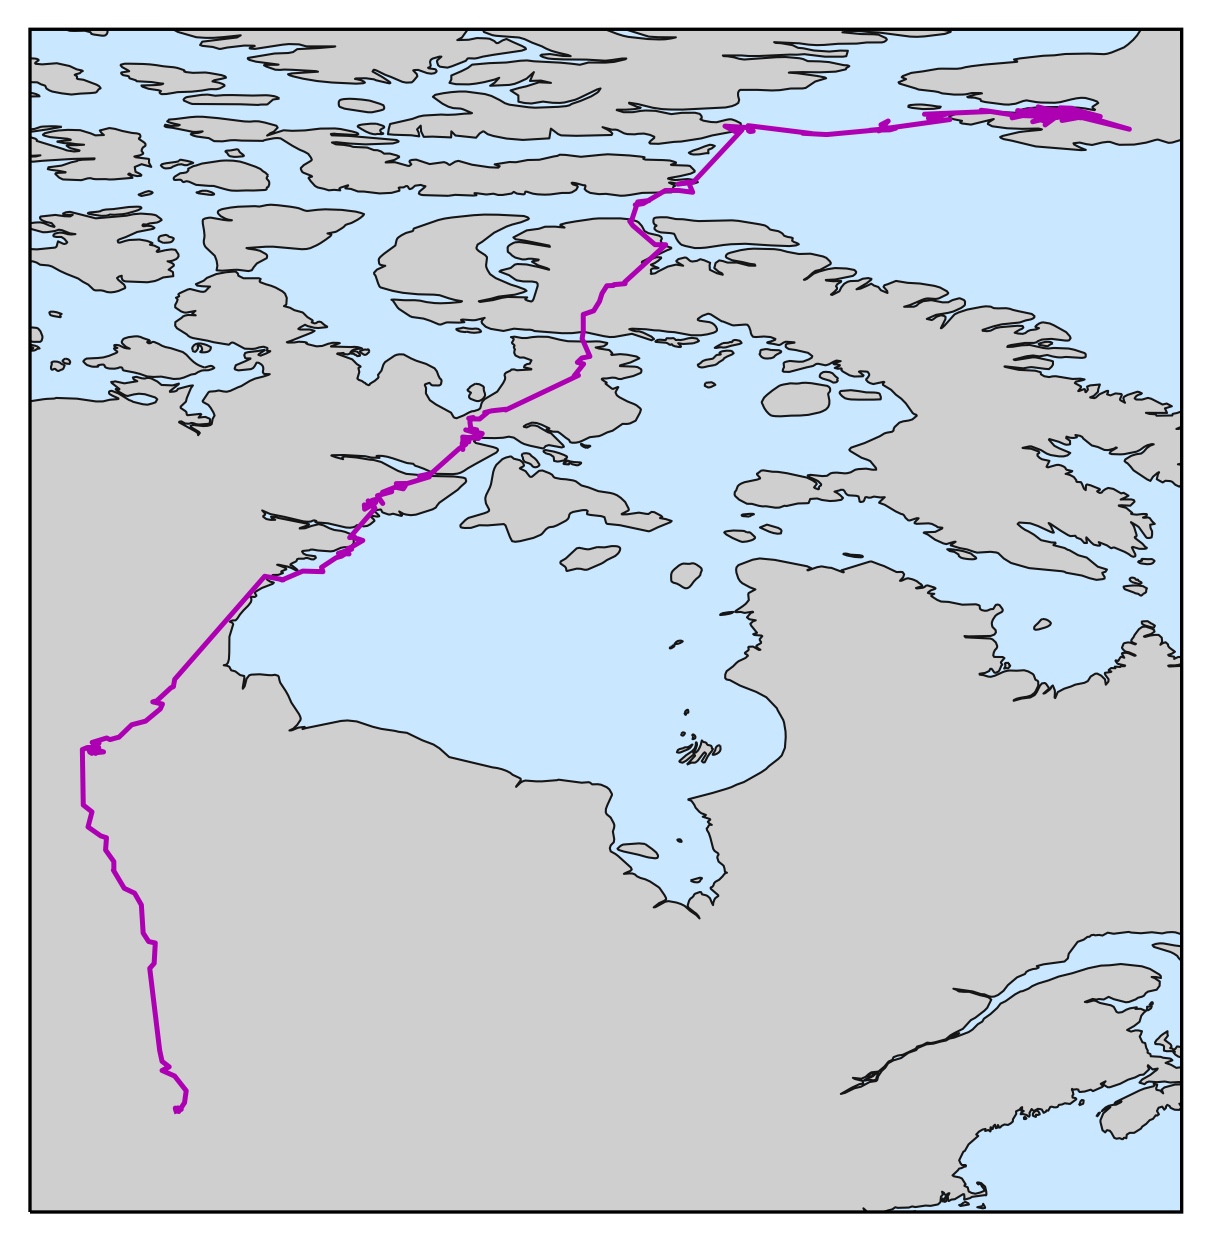 Migratory route of a peregrine falcon.